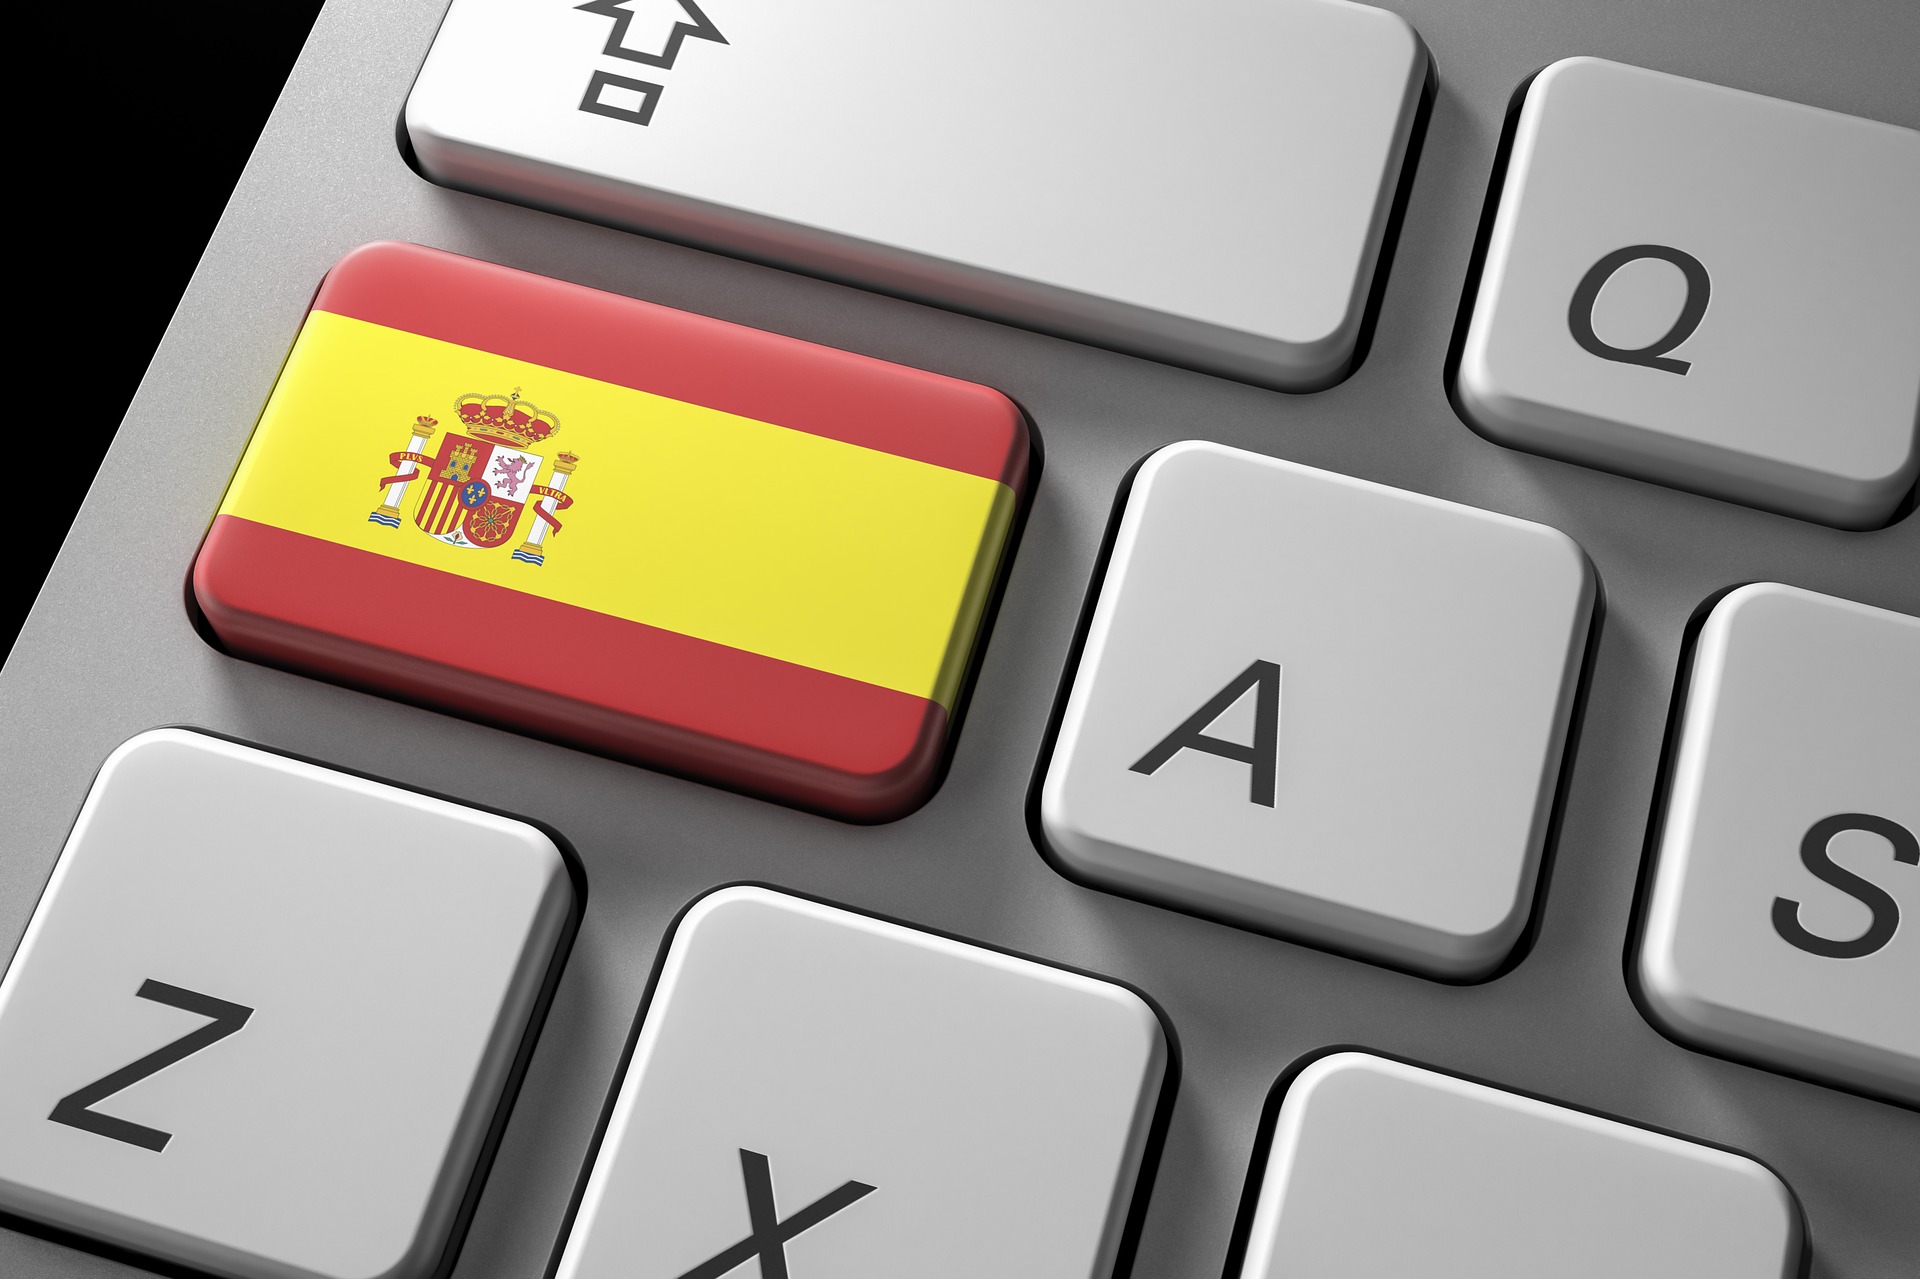 LEGID Moves Into Spanish Market, Expanding Its Global Presence